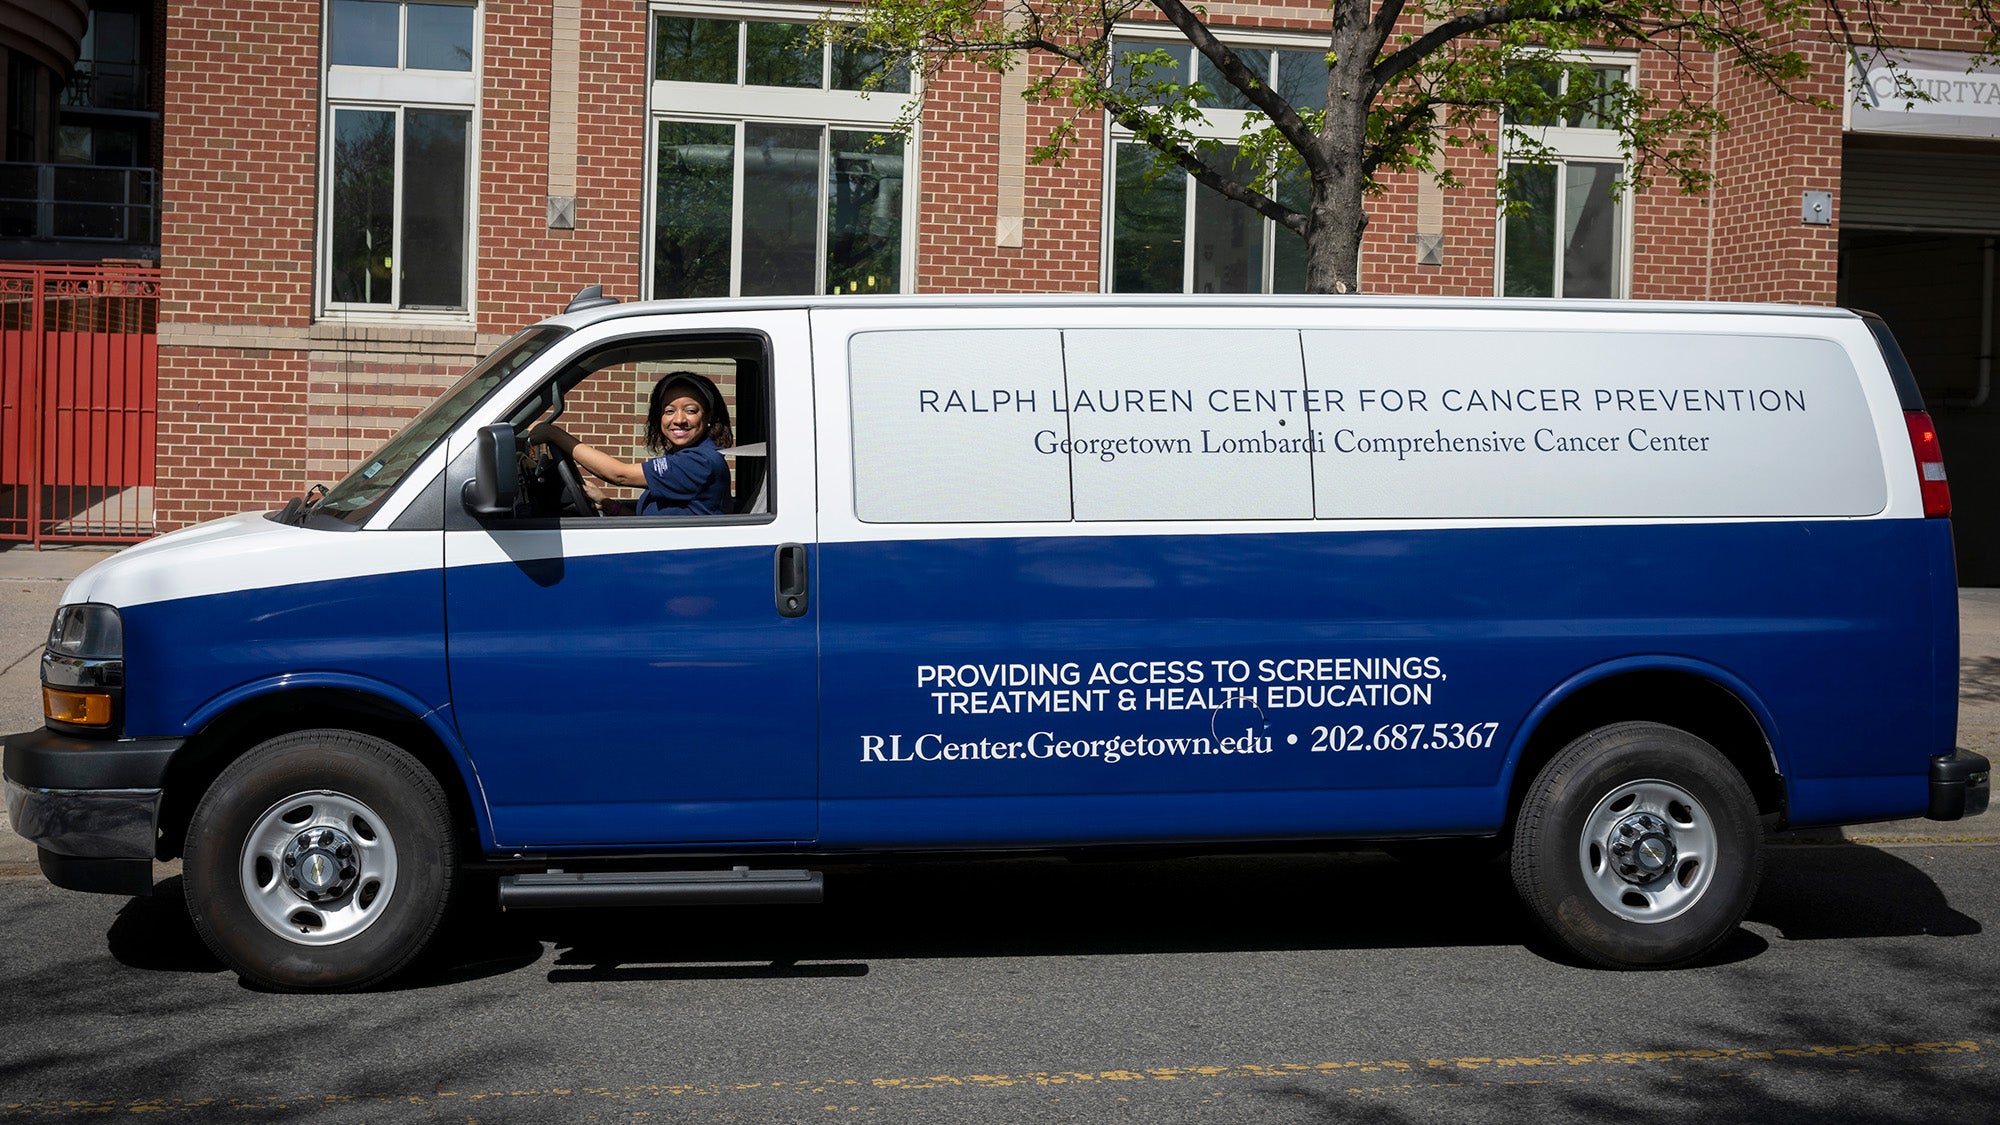 Natalie drives the Ralph Lauren Center van